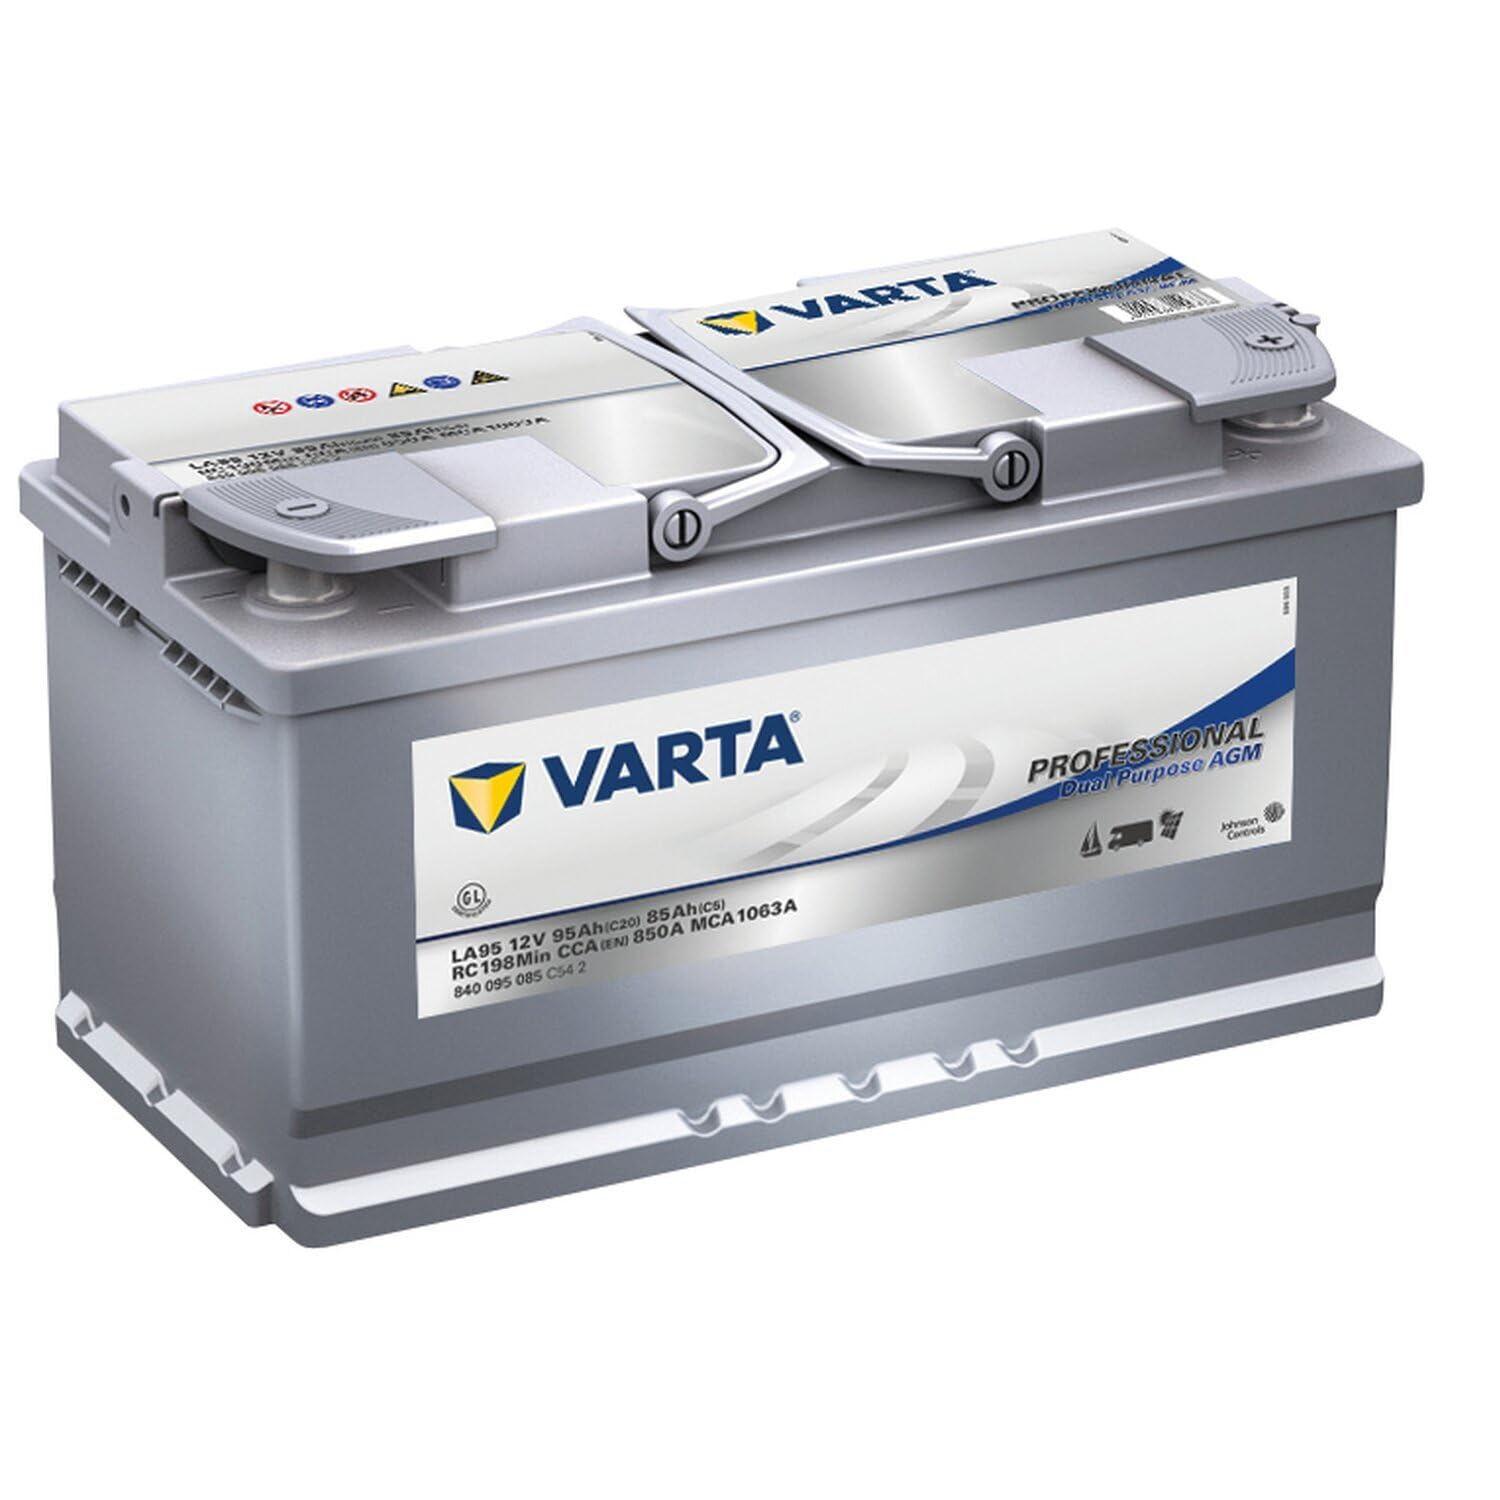 VARTA Professional Dual Purpose AGM LA95 von Varta